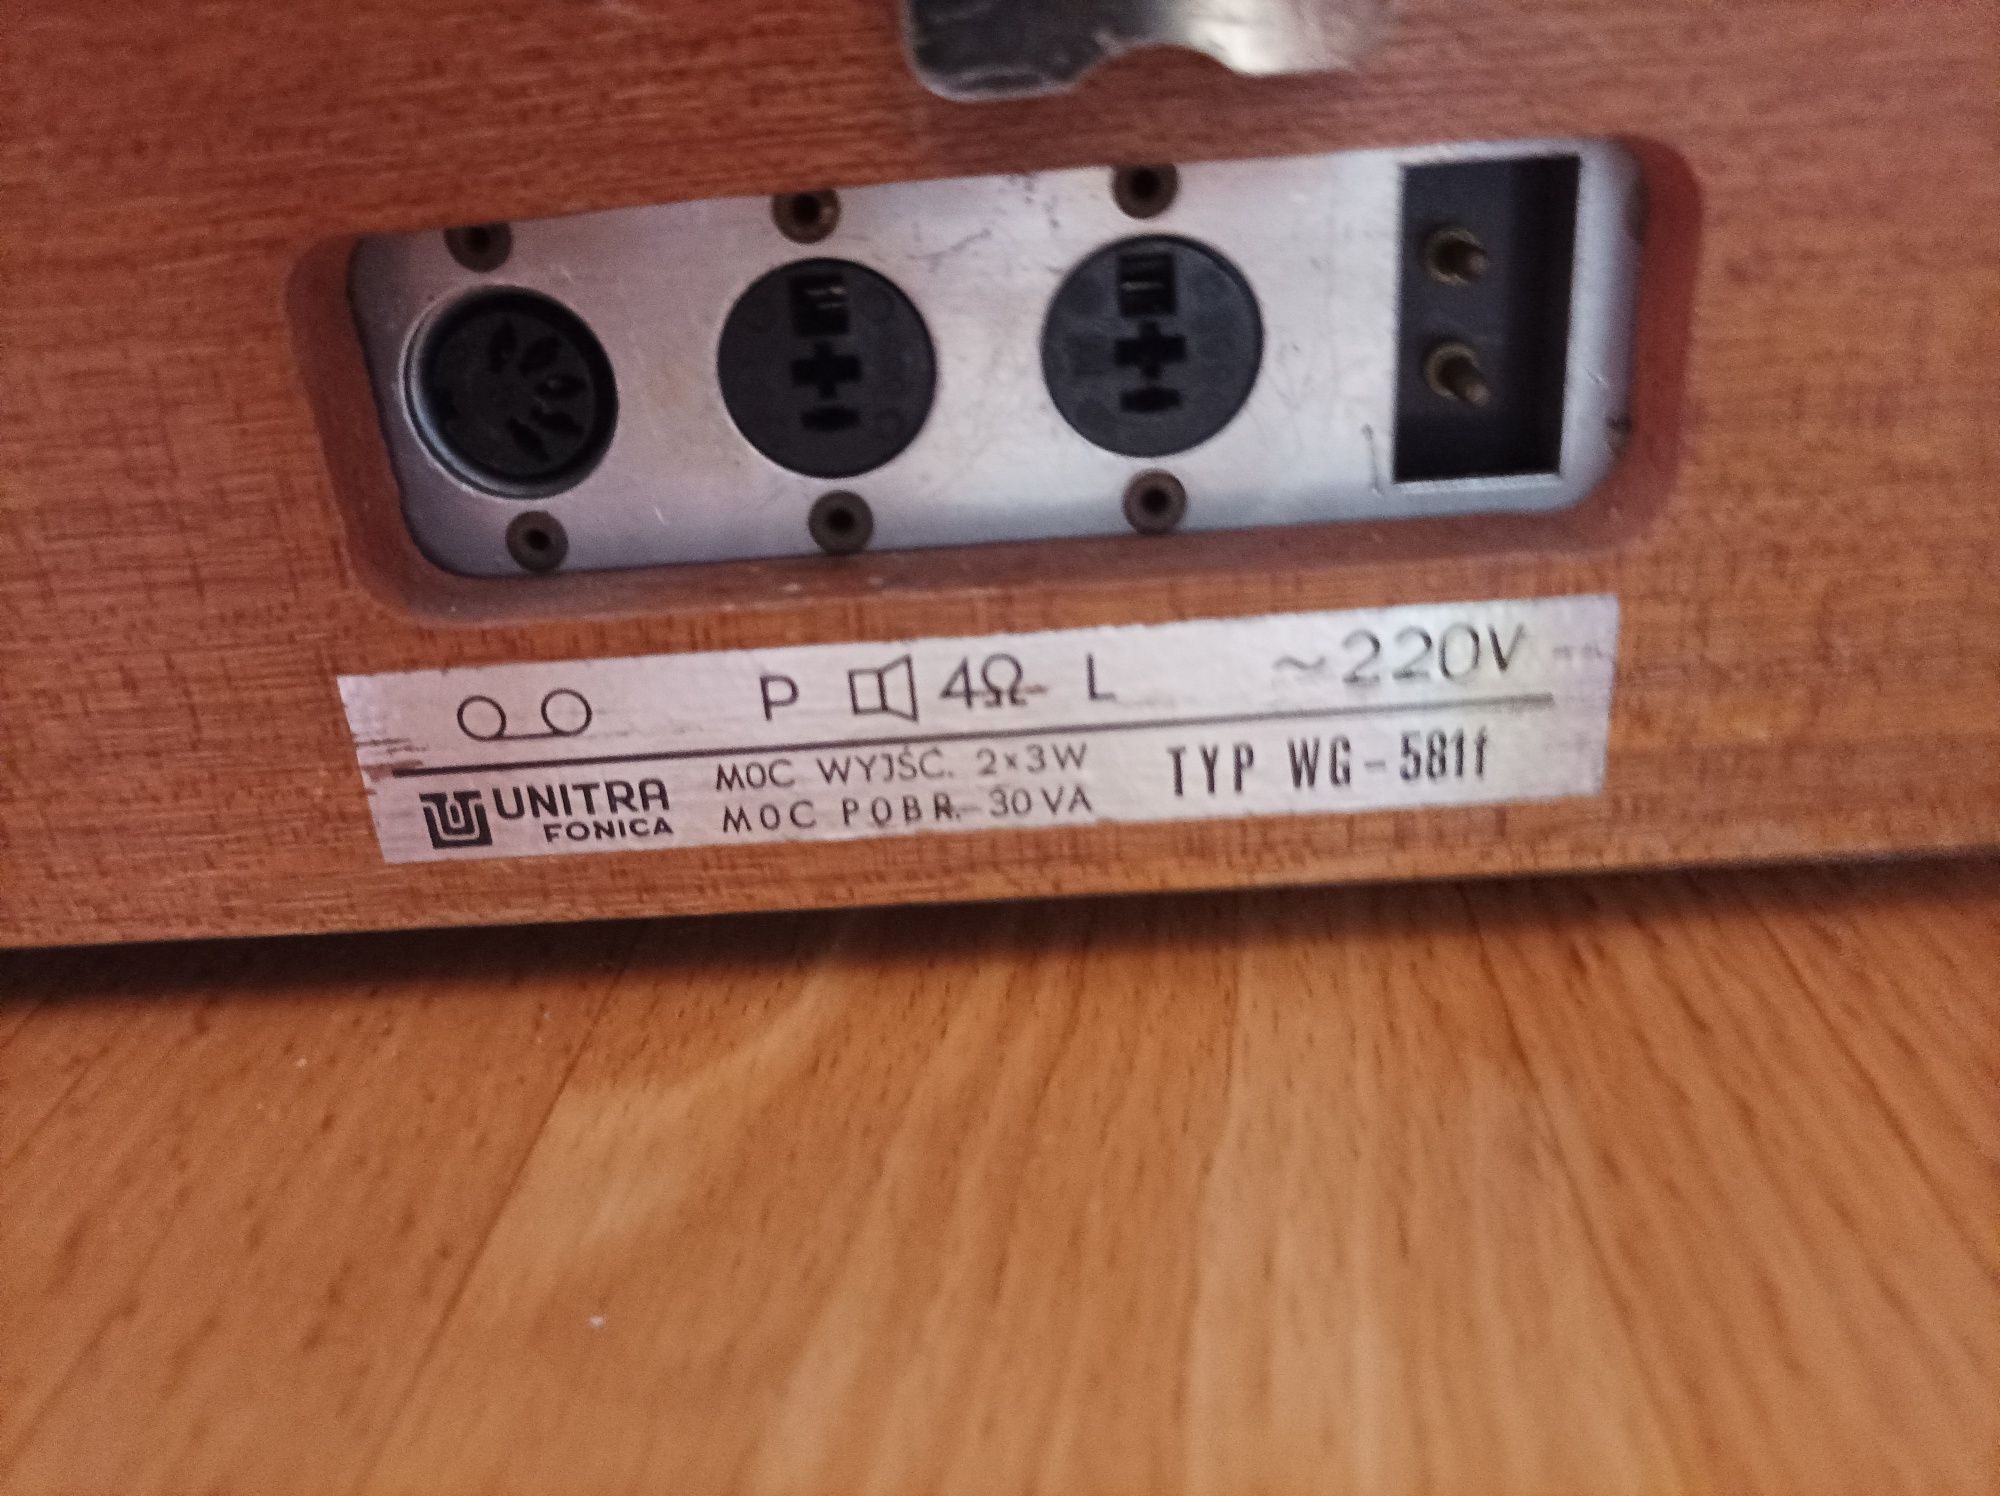 Gramofon UNITRA Fonica typ WG-581f